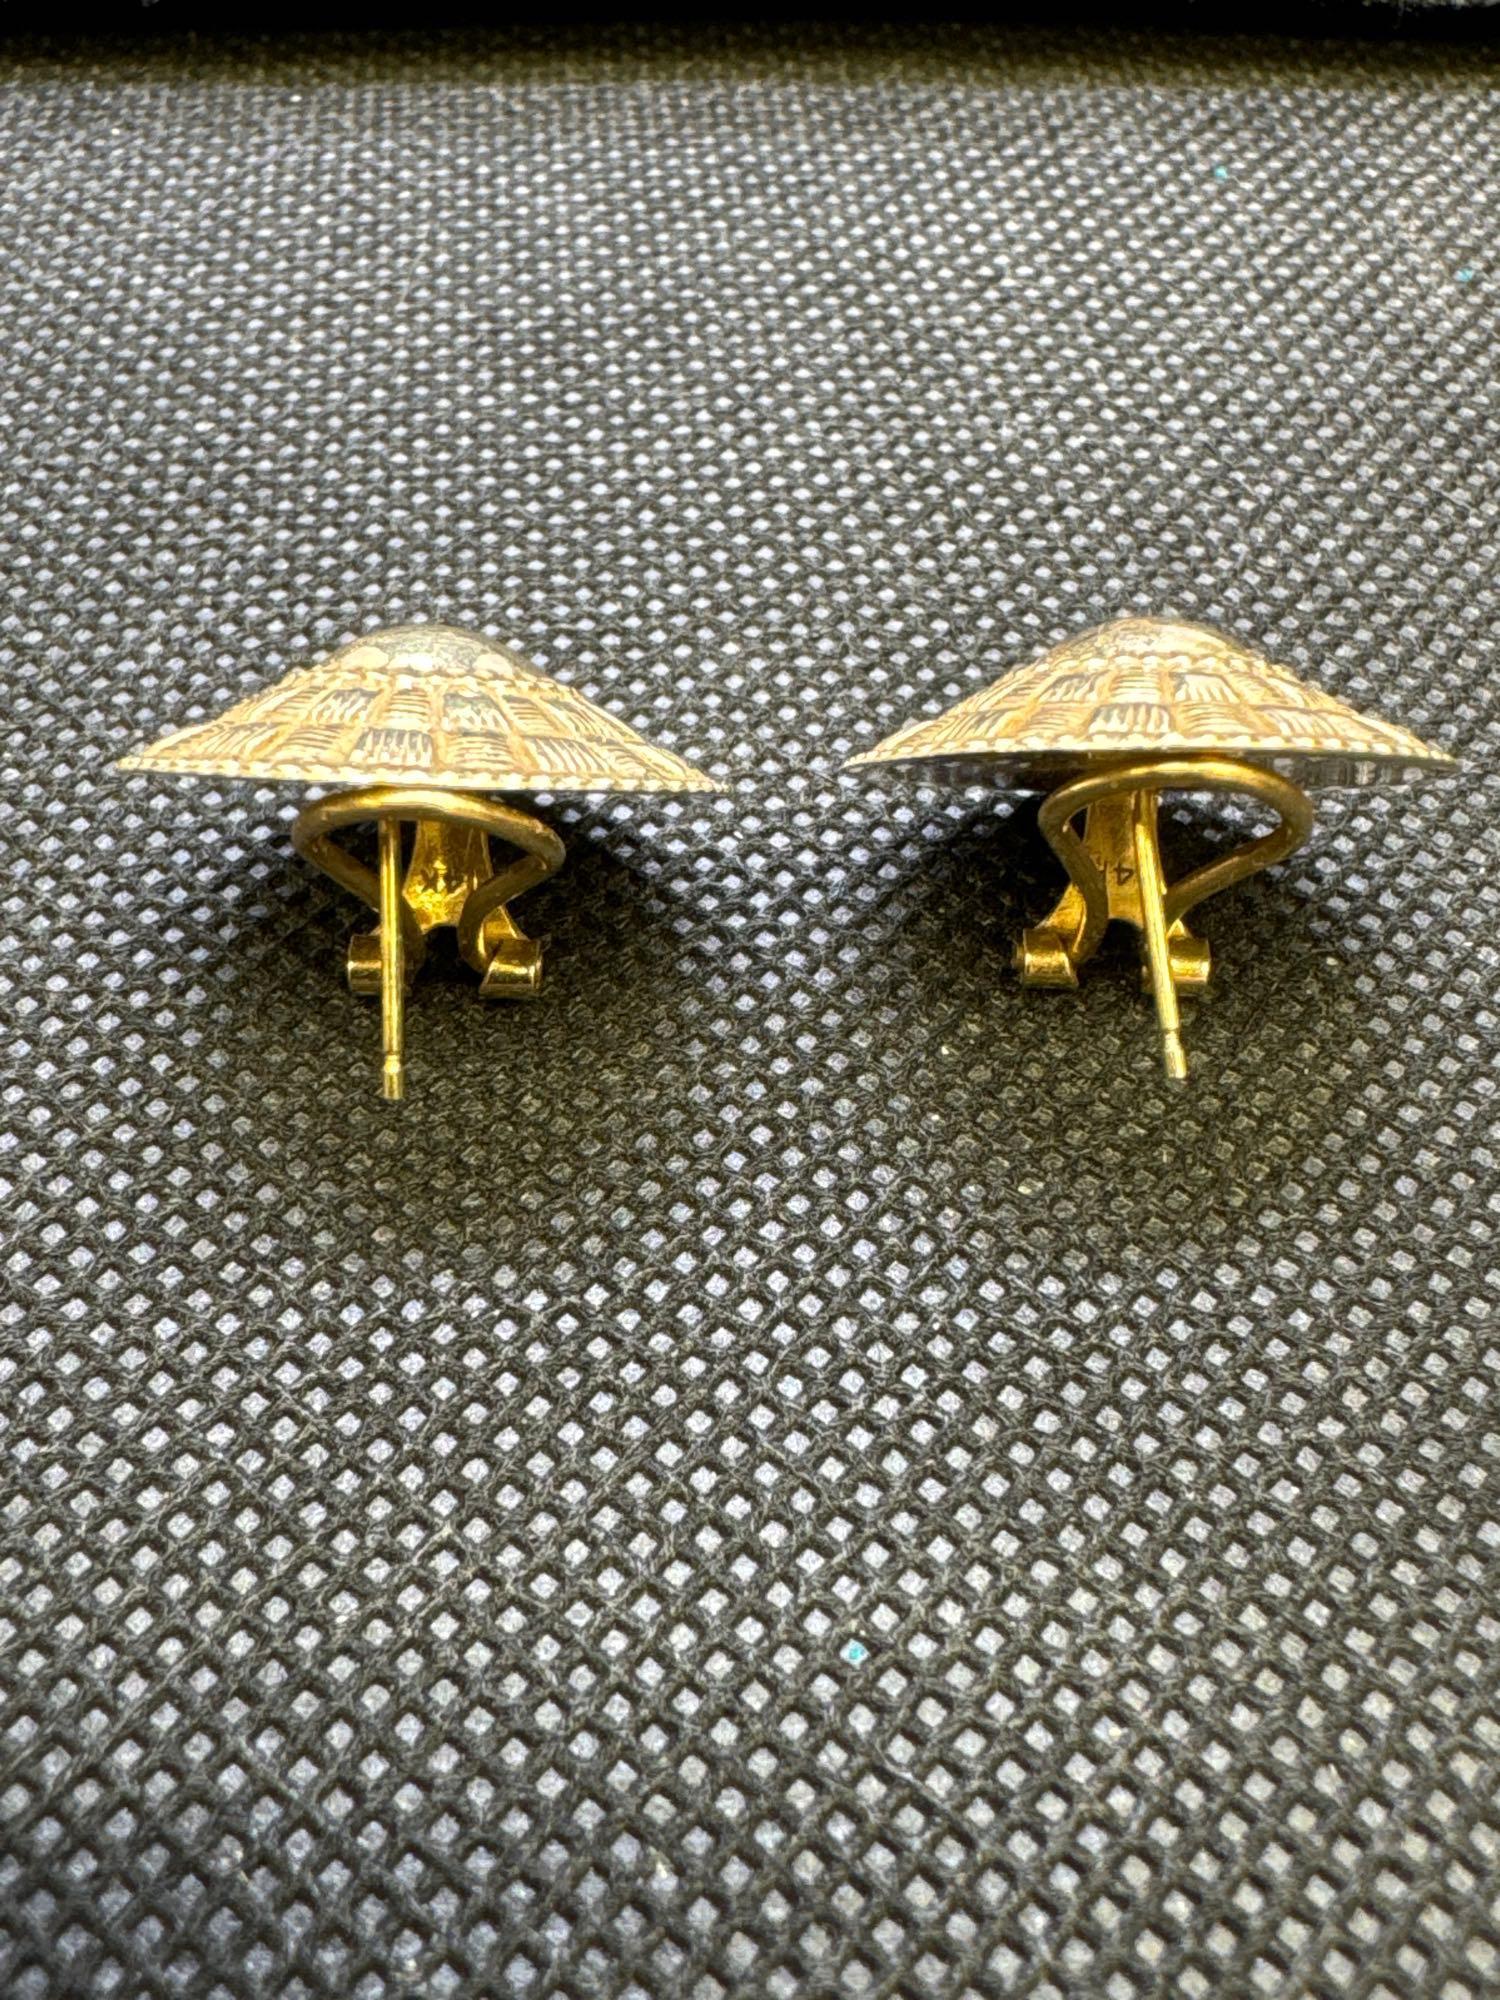 2 Pairs of 14kt Gold Earrings 7.52 Grams